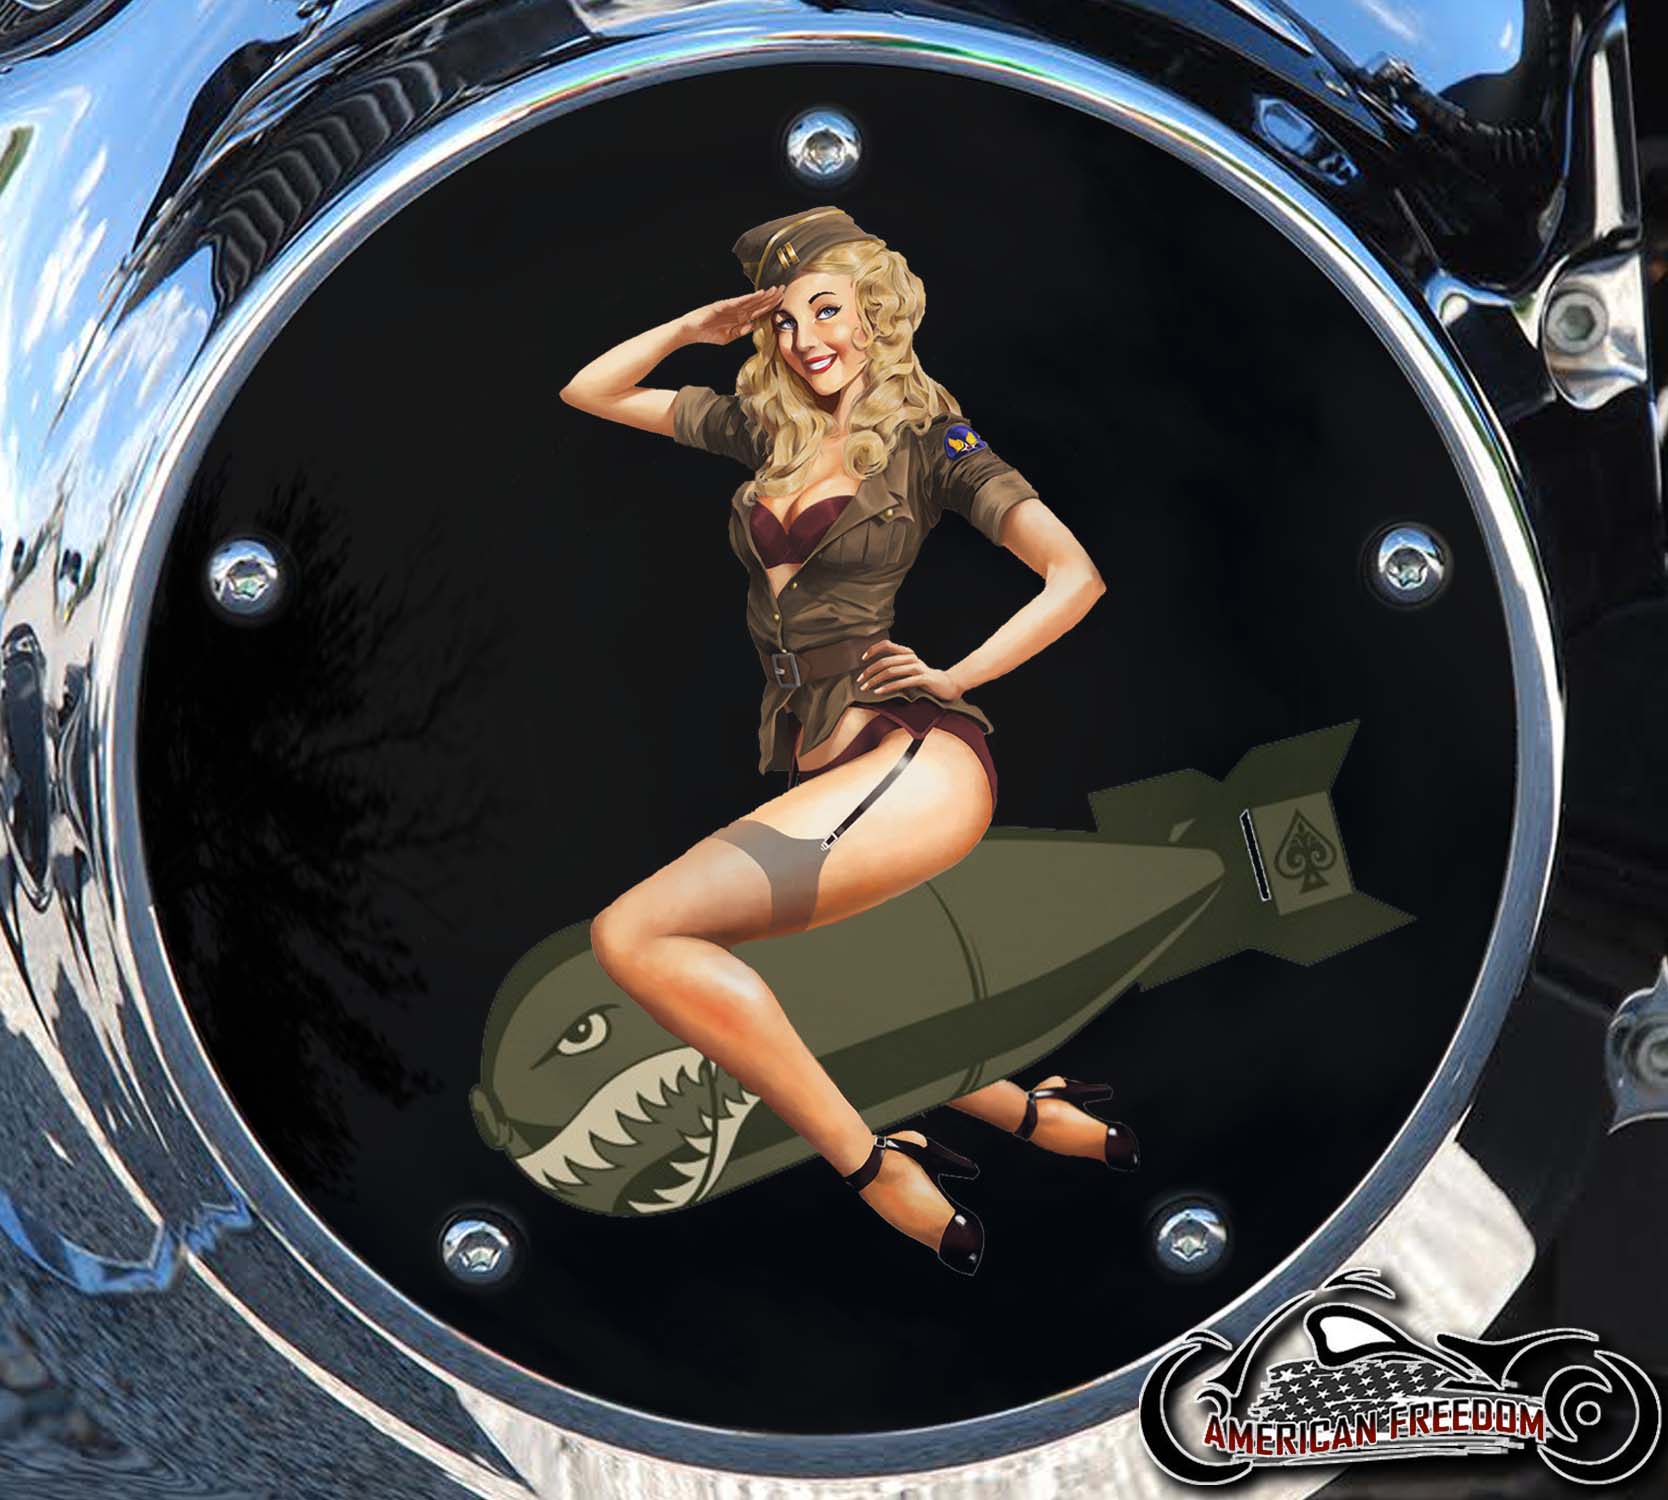 Custom Derby Cover - Pin Up Blond Bomber Girl On Bomb